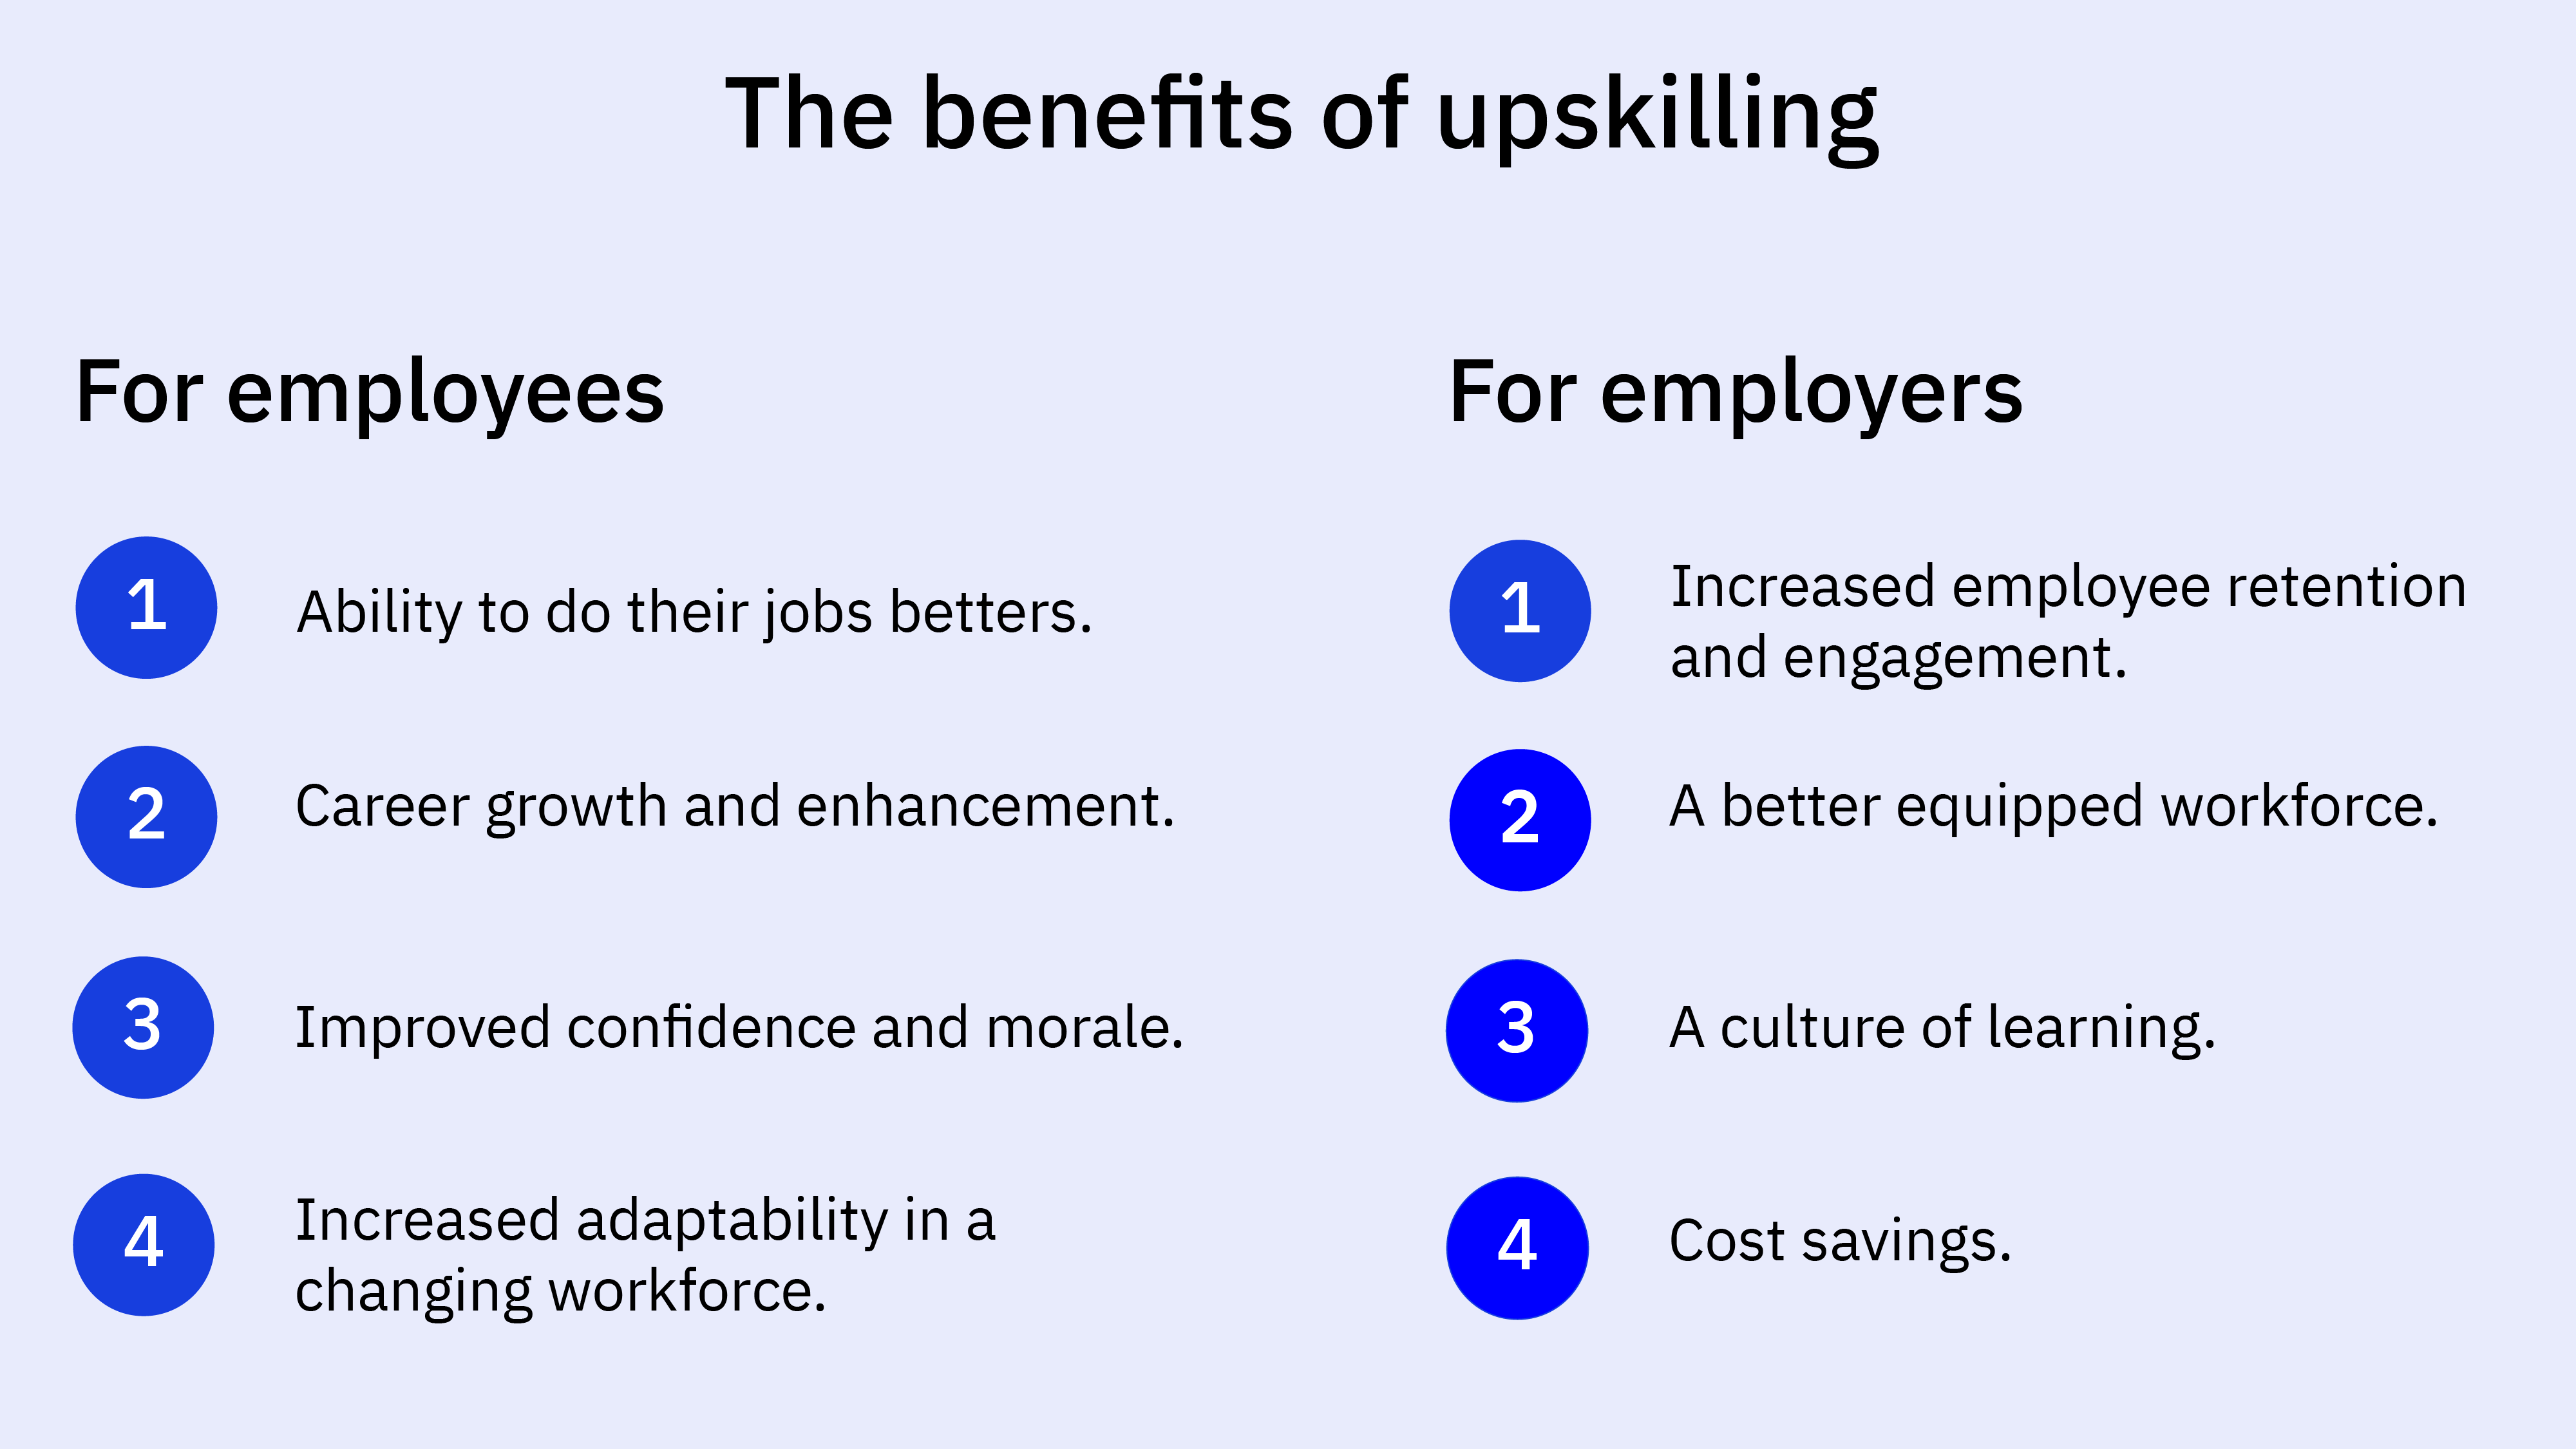 The benefits of upskilling